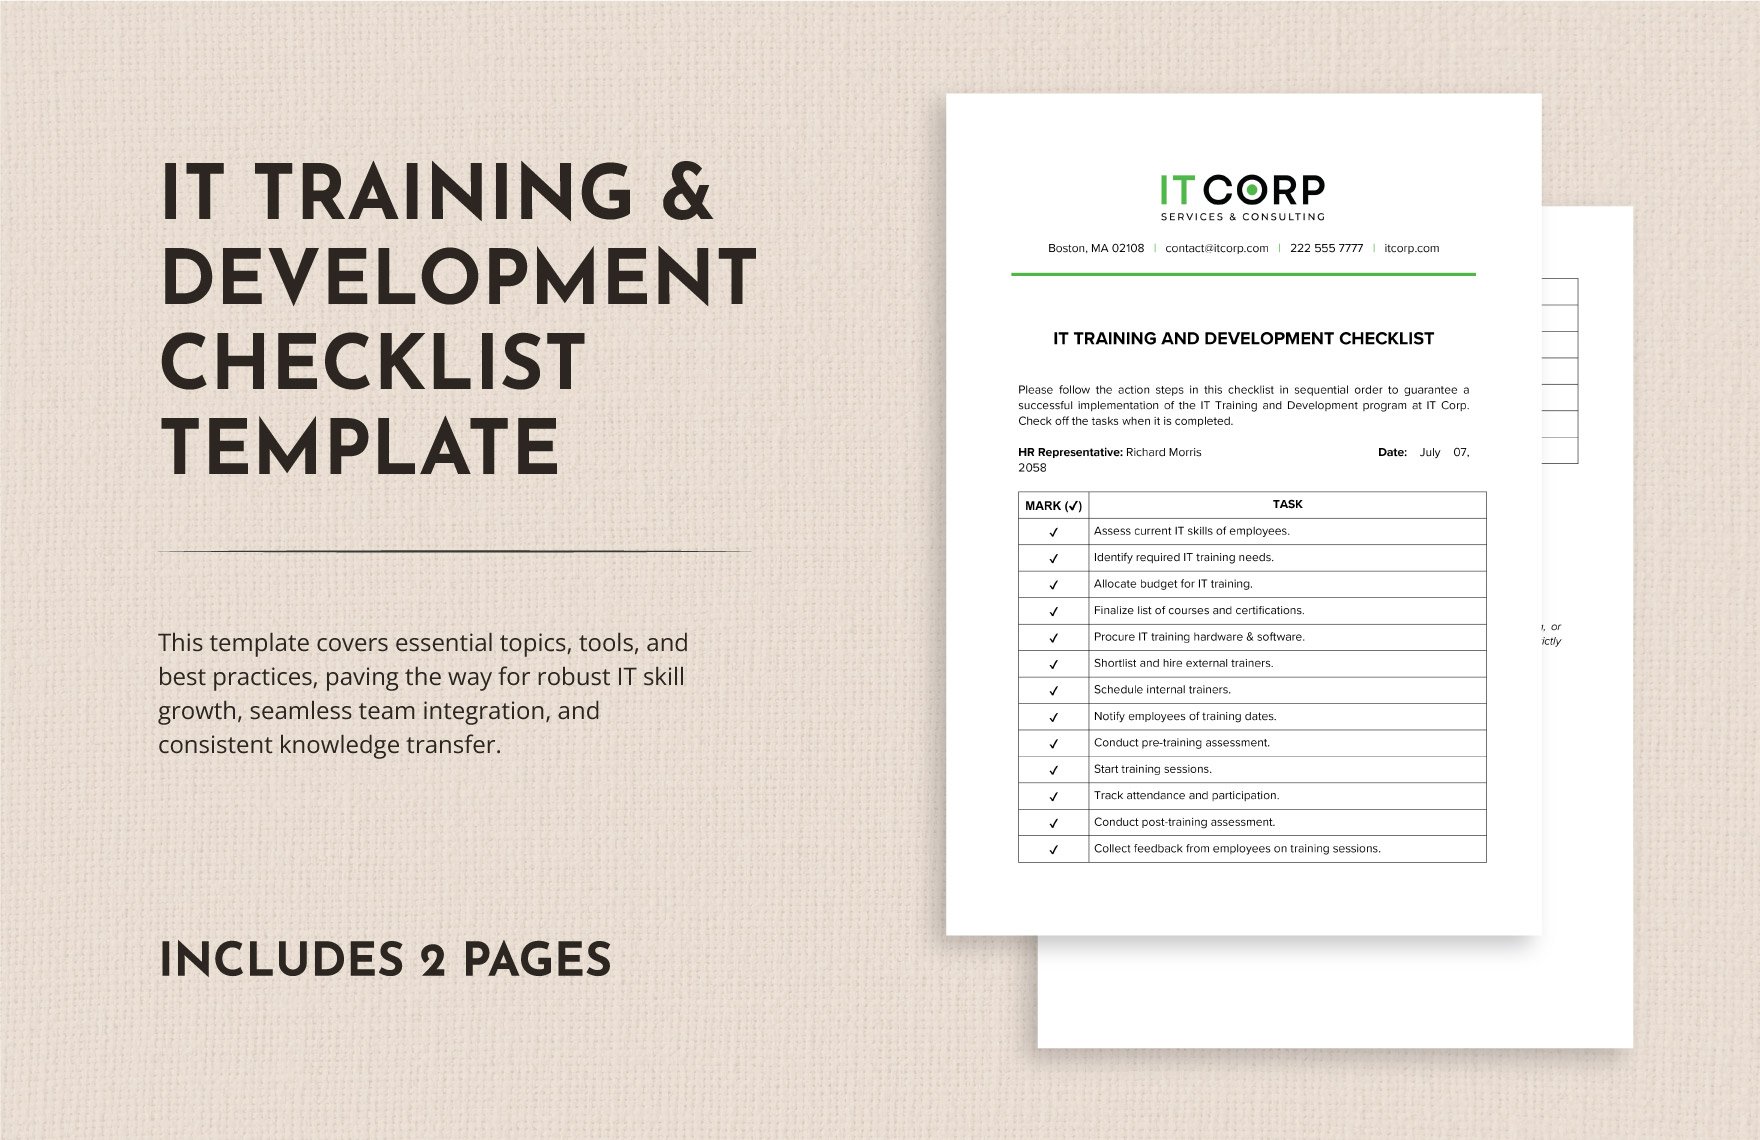 IT Training & Development Checklist Template in Word, Google Docs, PDF